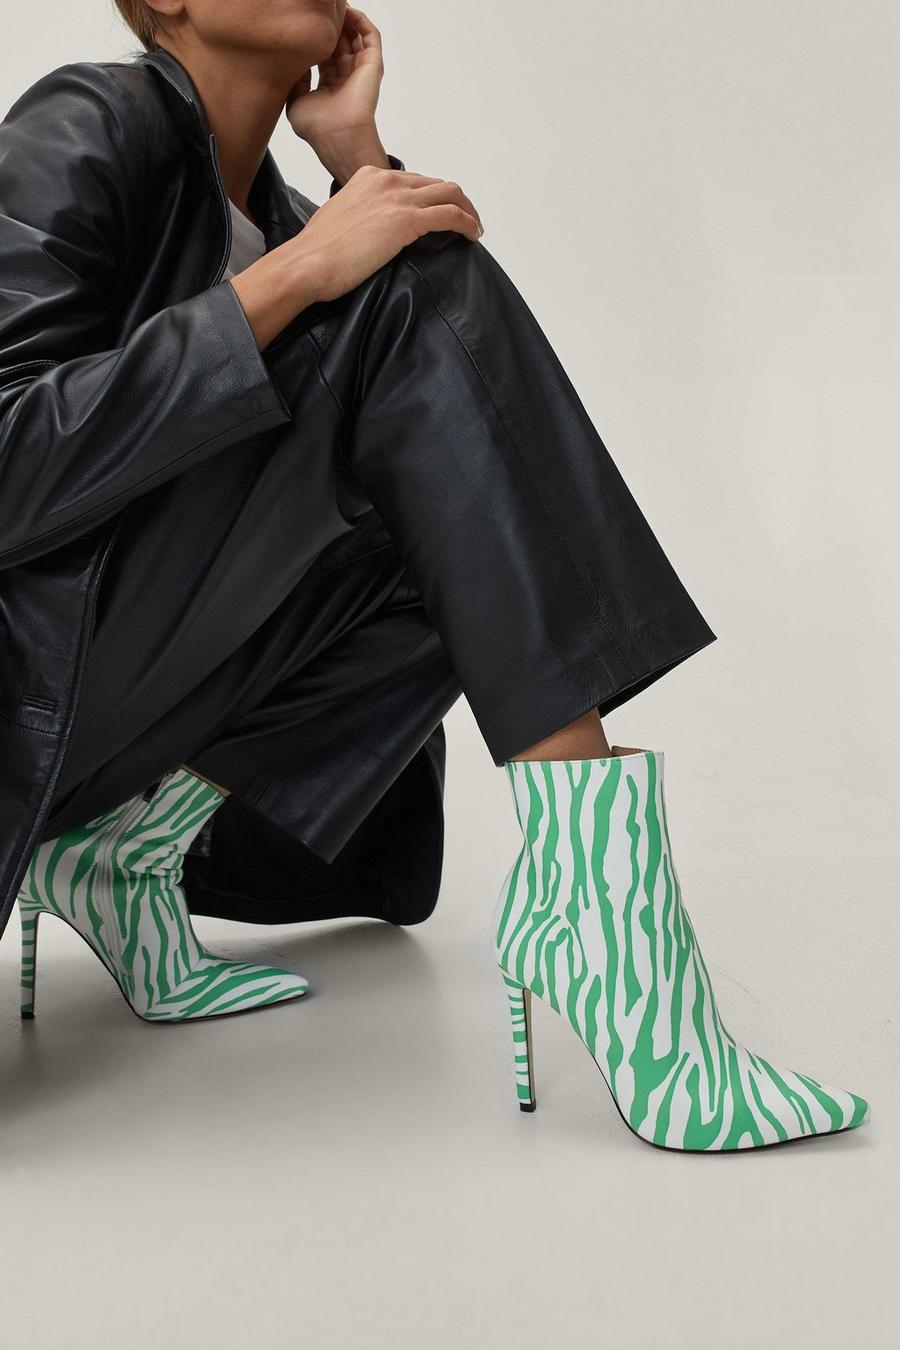 Green gerde Zebra Print Stiletto Ankle Boots